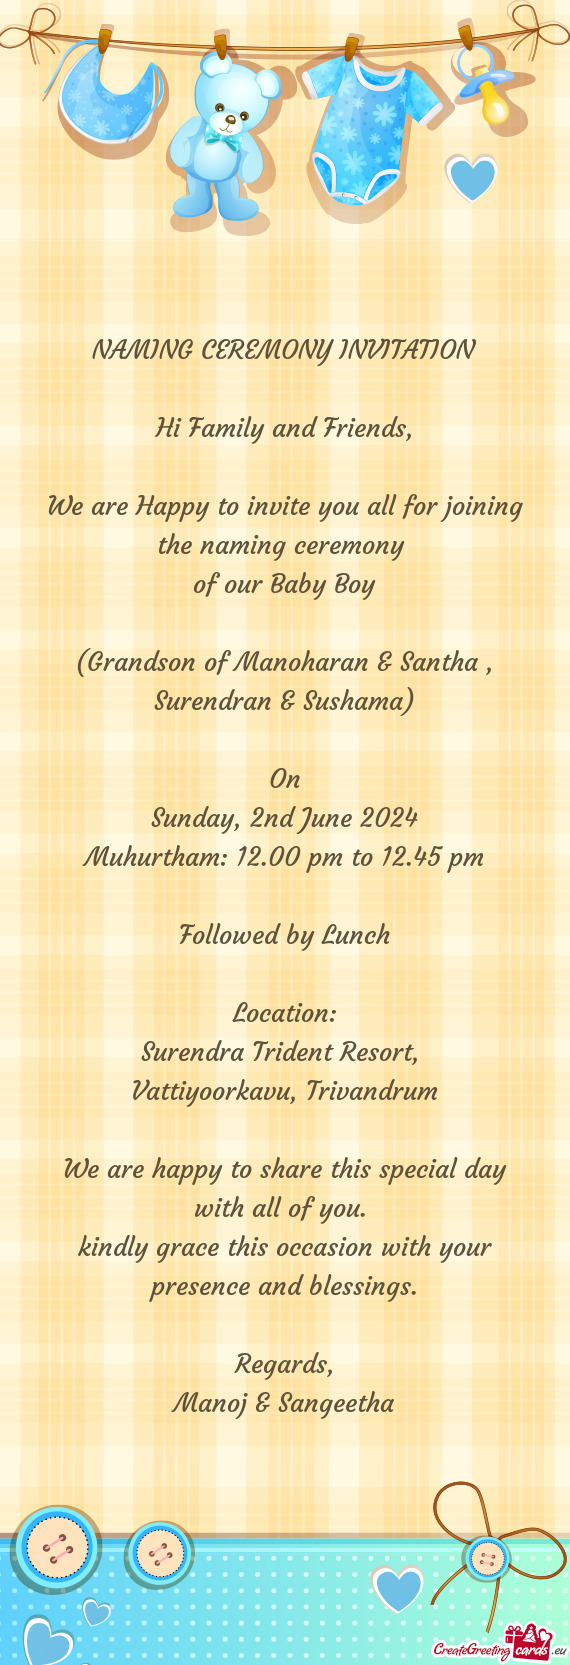 (Grandson of Manoharan & Santha , Surendran & Sushama)